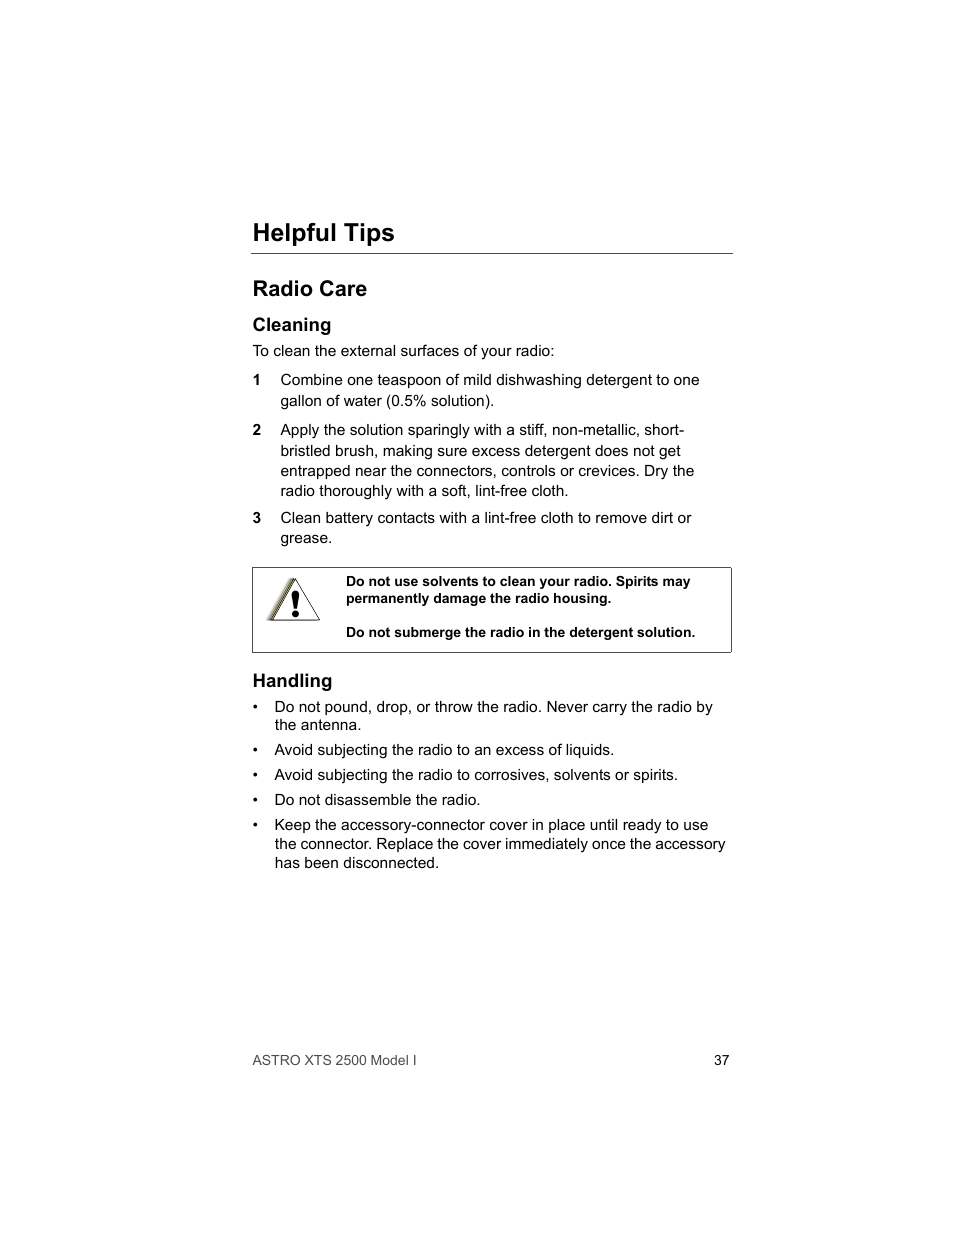 Helpful tips, Radio care, Cleaning | Motorola XTS2500 User Manual